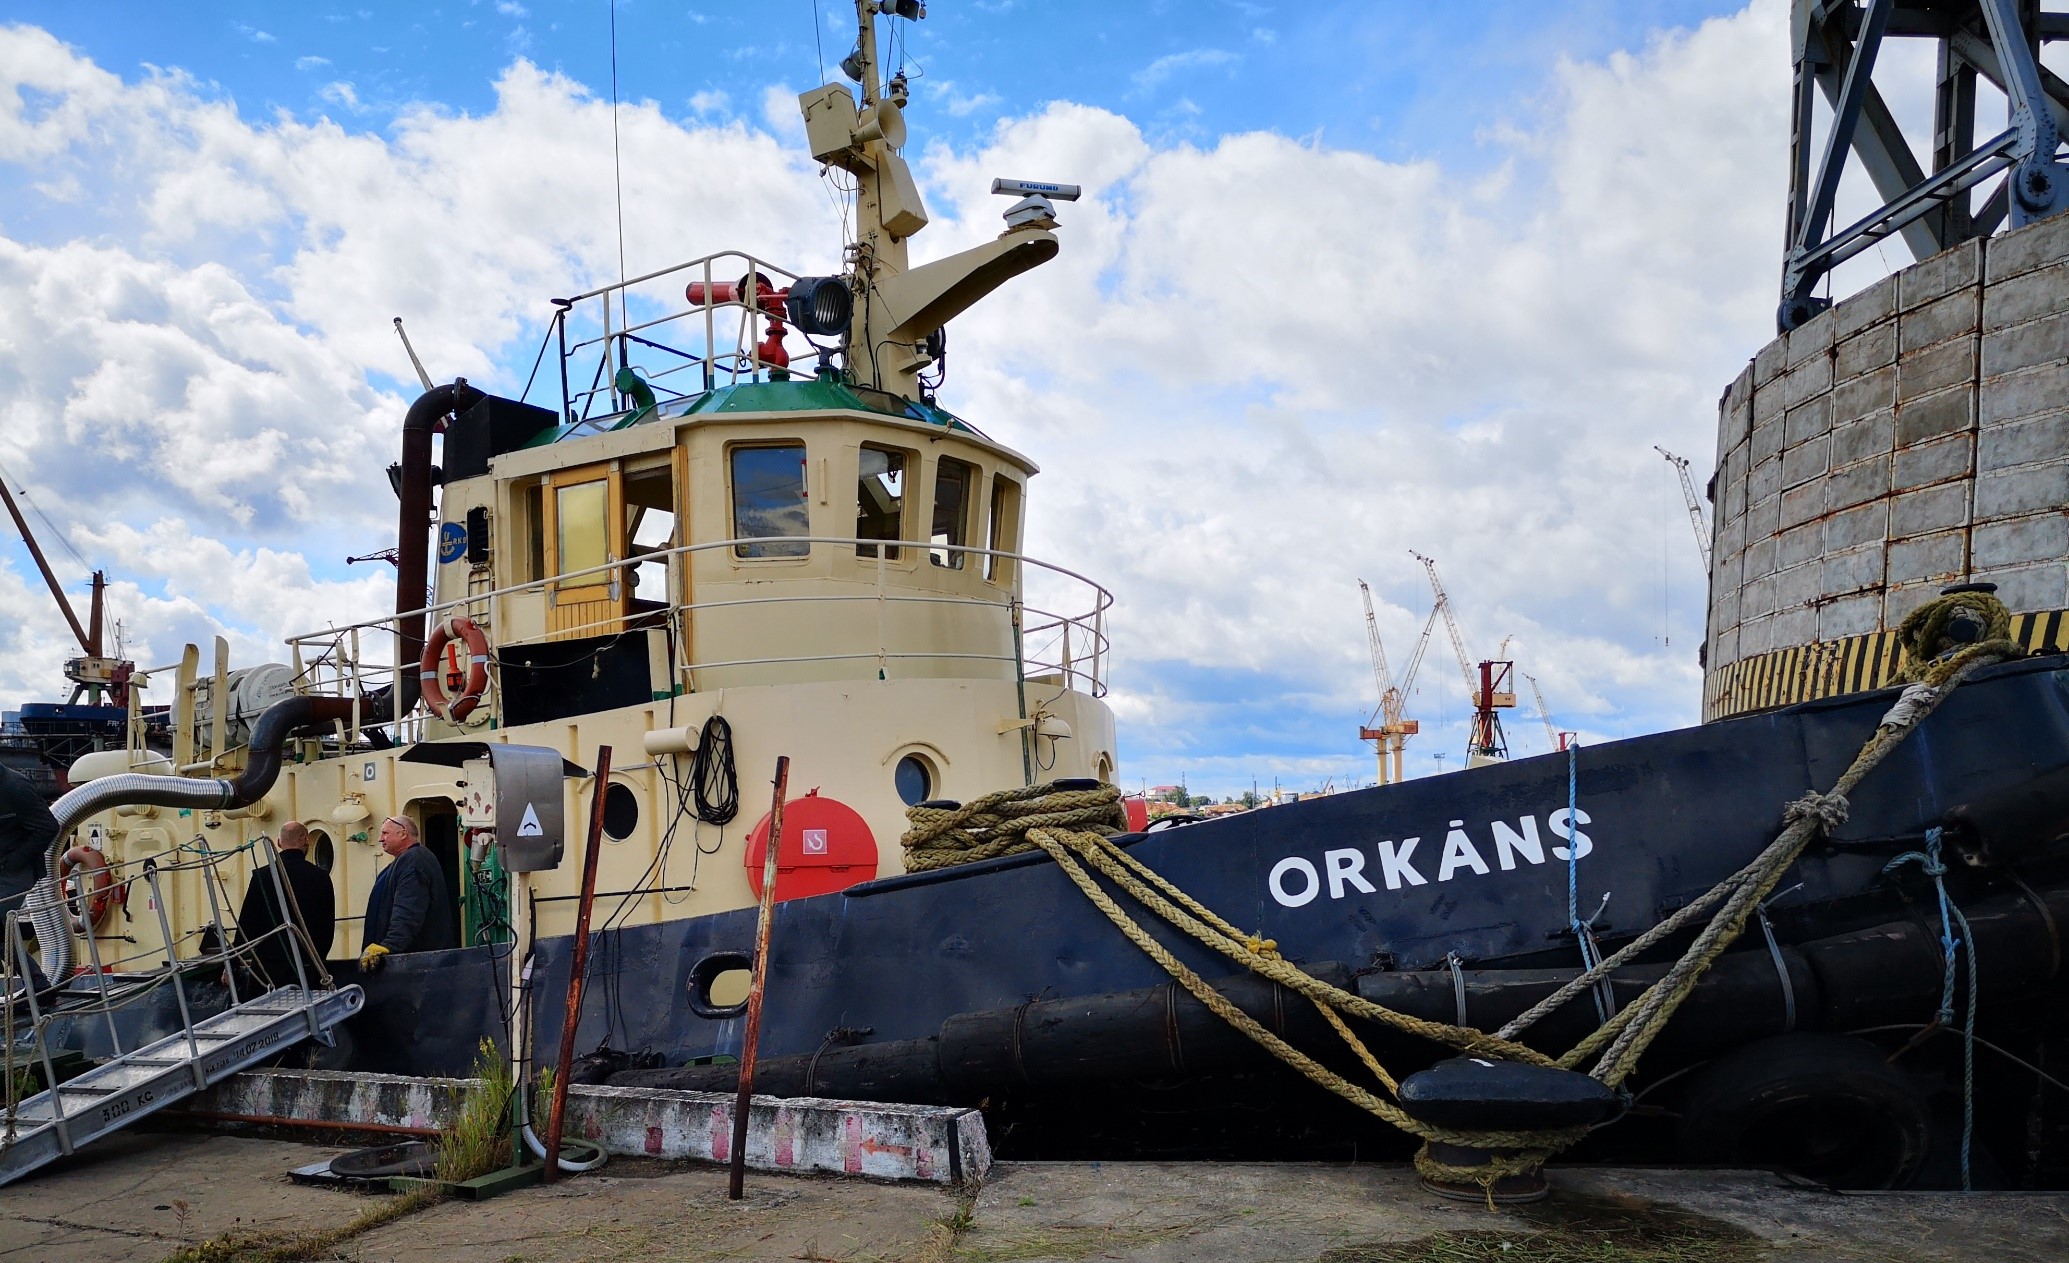 The tugboat Orkāns. (Image: ARIES)